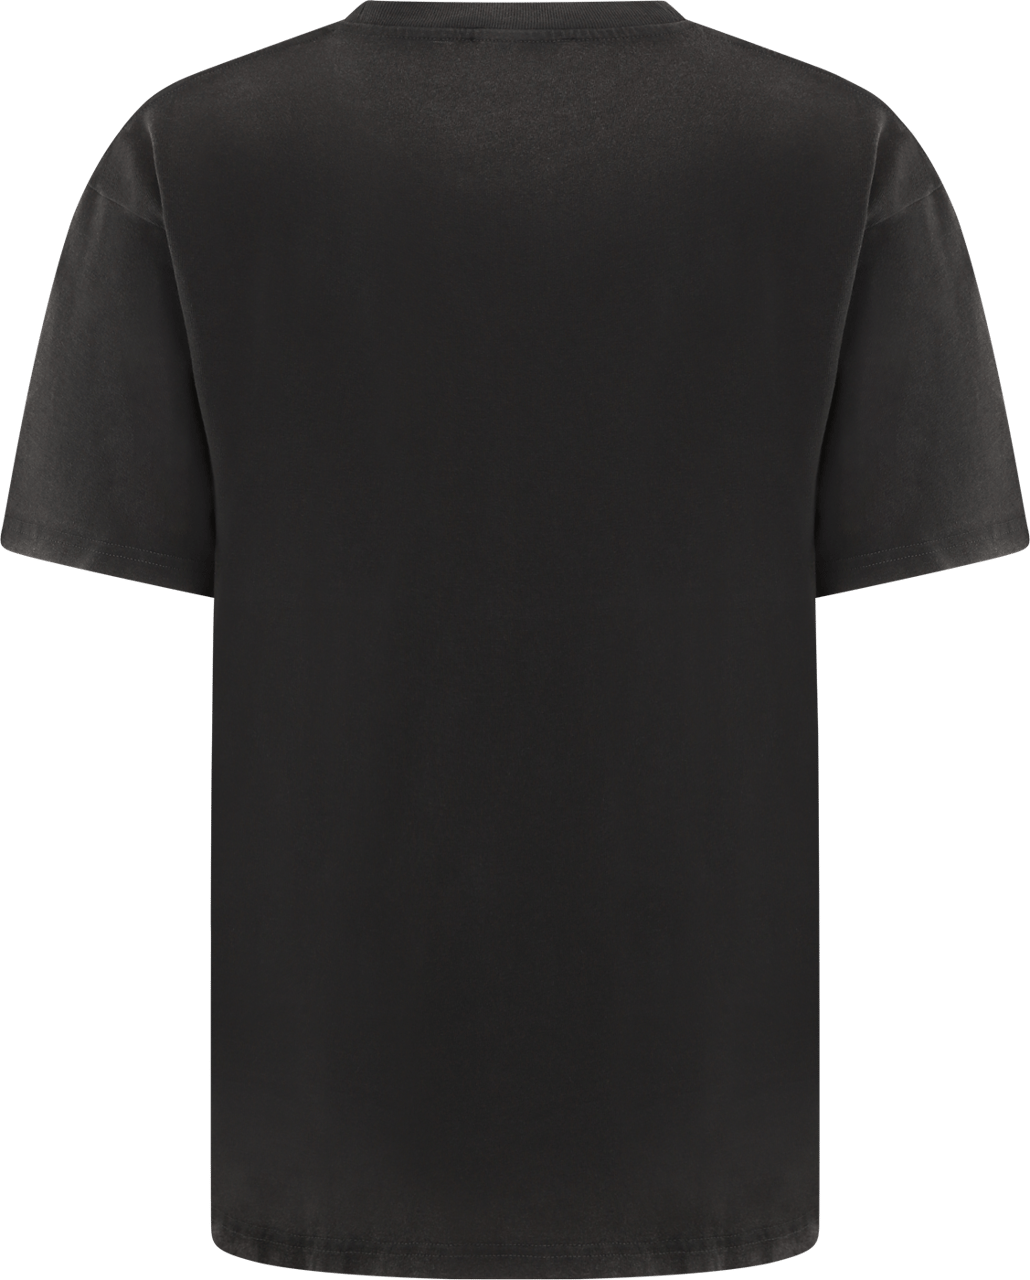 Represent thoroughbred t-shirt black Zwart